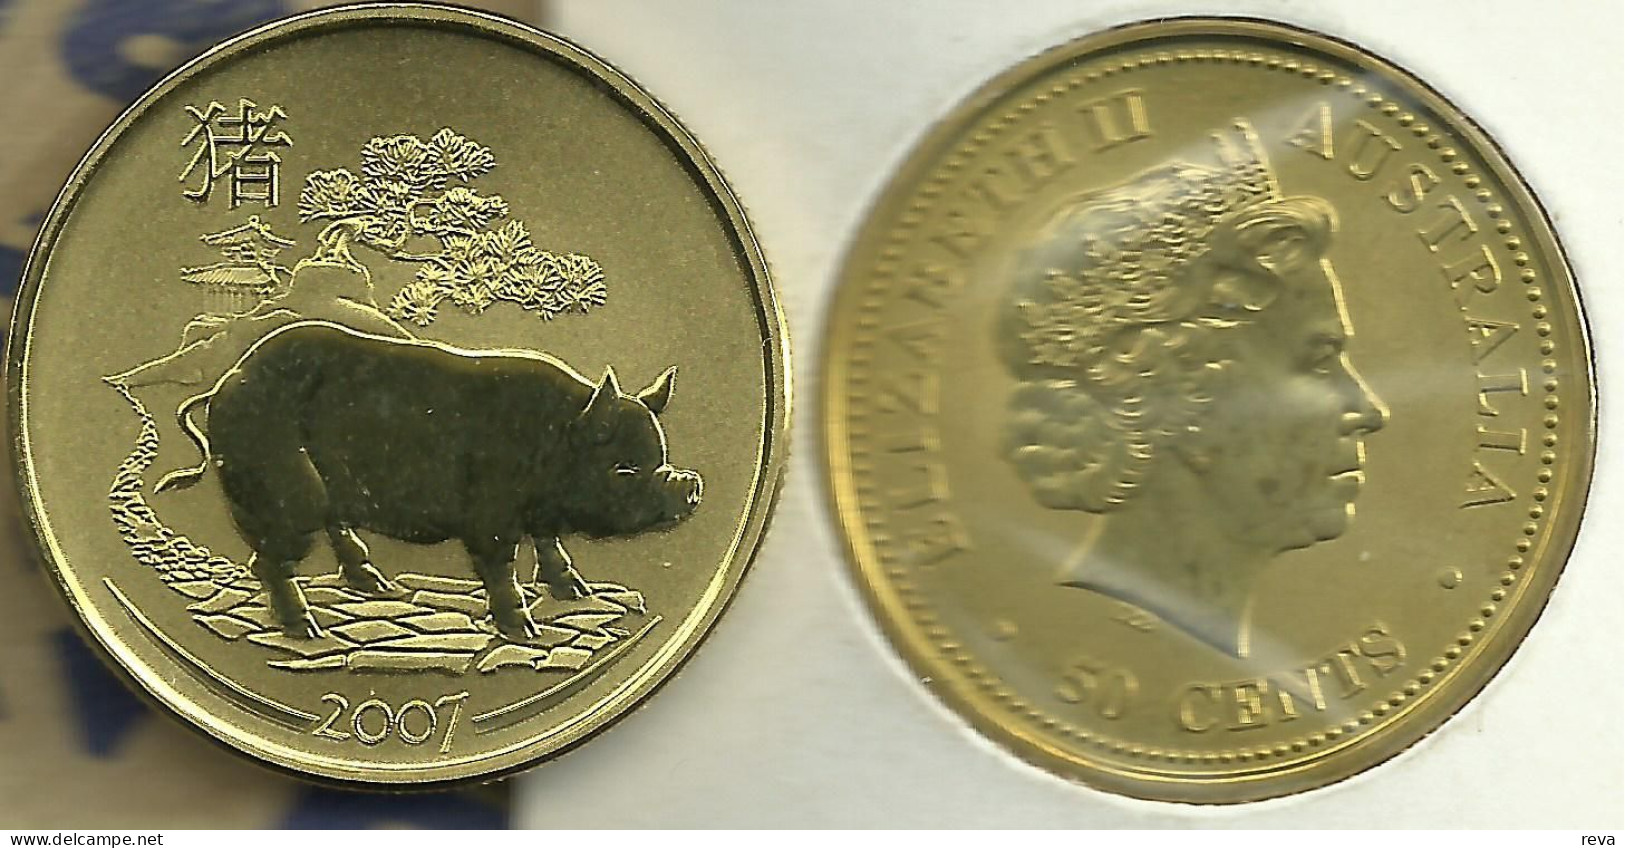 AUSTRALIA 50 CENTS ZODIAC SERIES YEAR OF PIG QEII HEAD 1 YEAR TYPE 2007 SILVER PROOF READ DESCRIPTION CAREFULLY!! - Silver Bullions